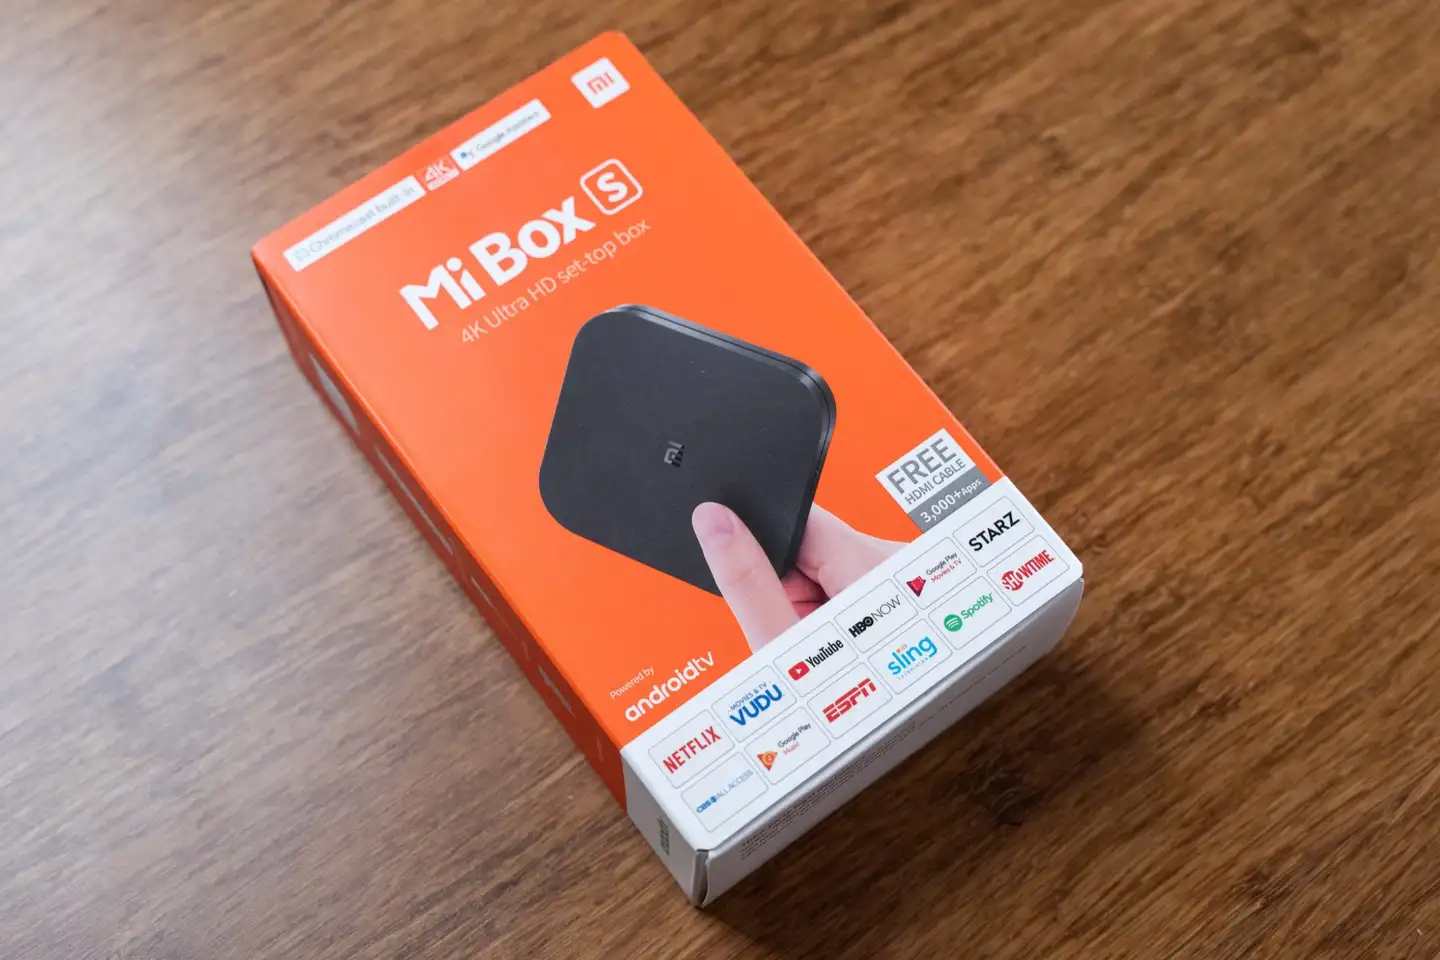 MiBox S 小米盒子4国际版| 可能是2019新年最值的原生AndroidTV - 知乎